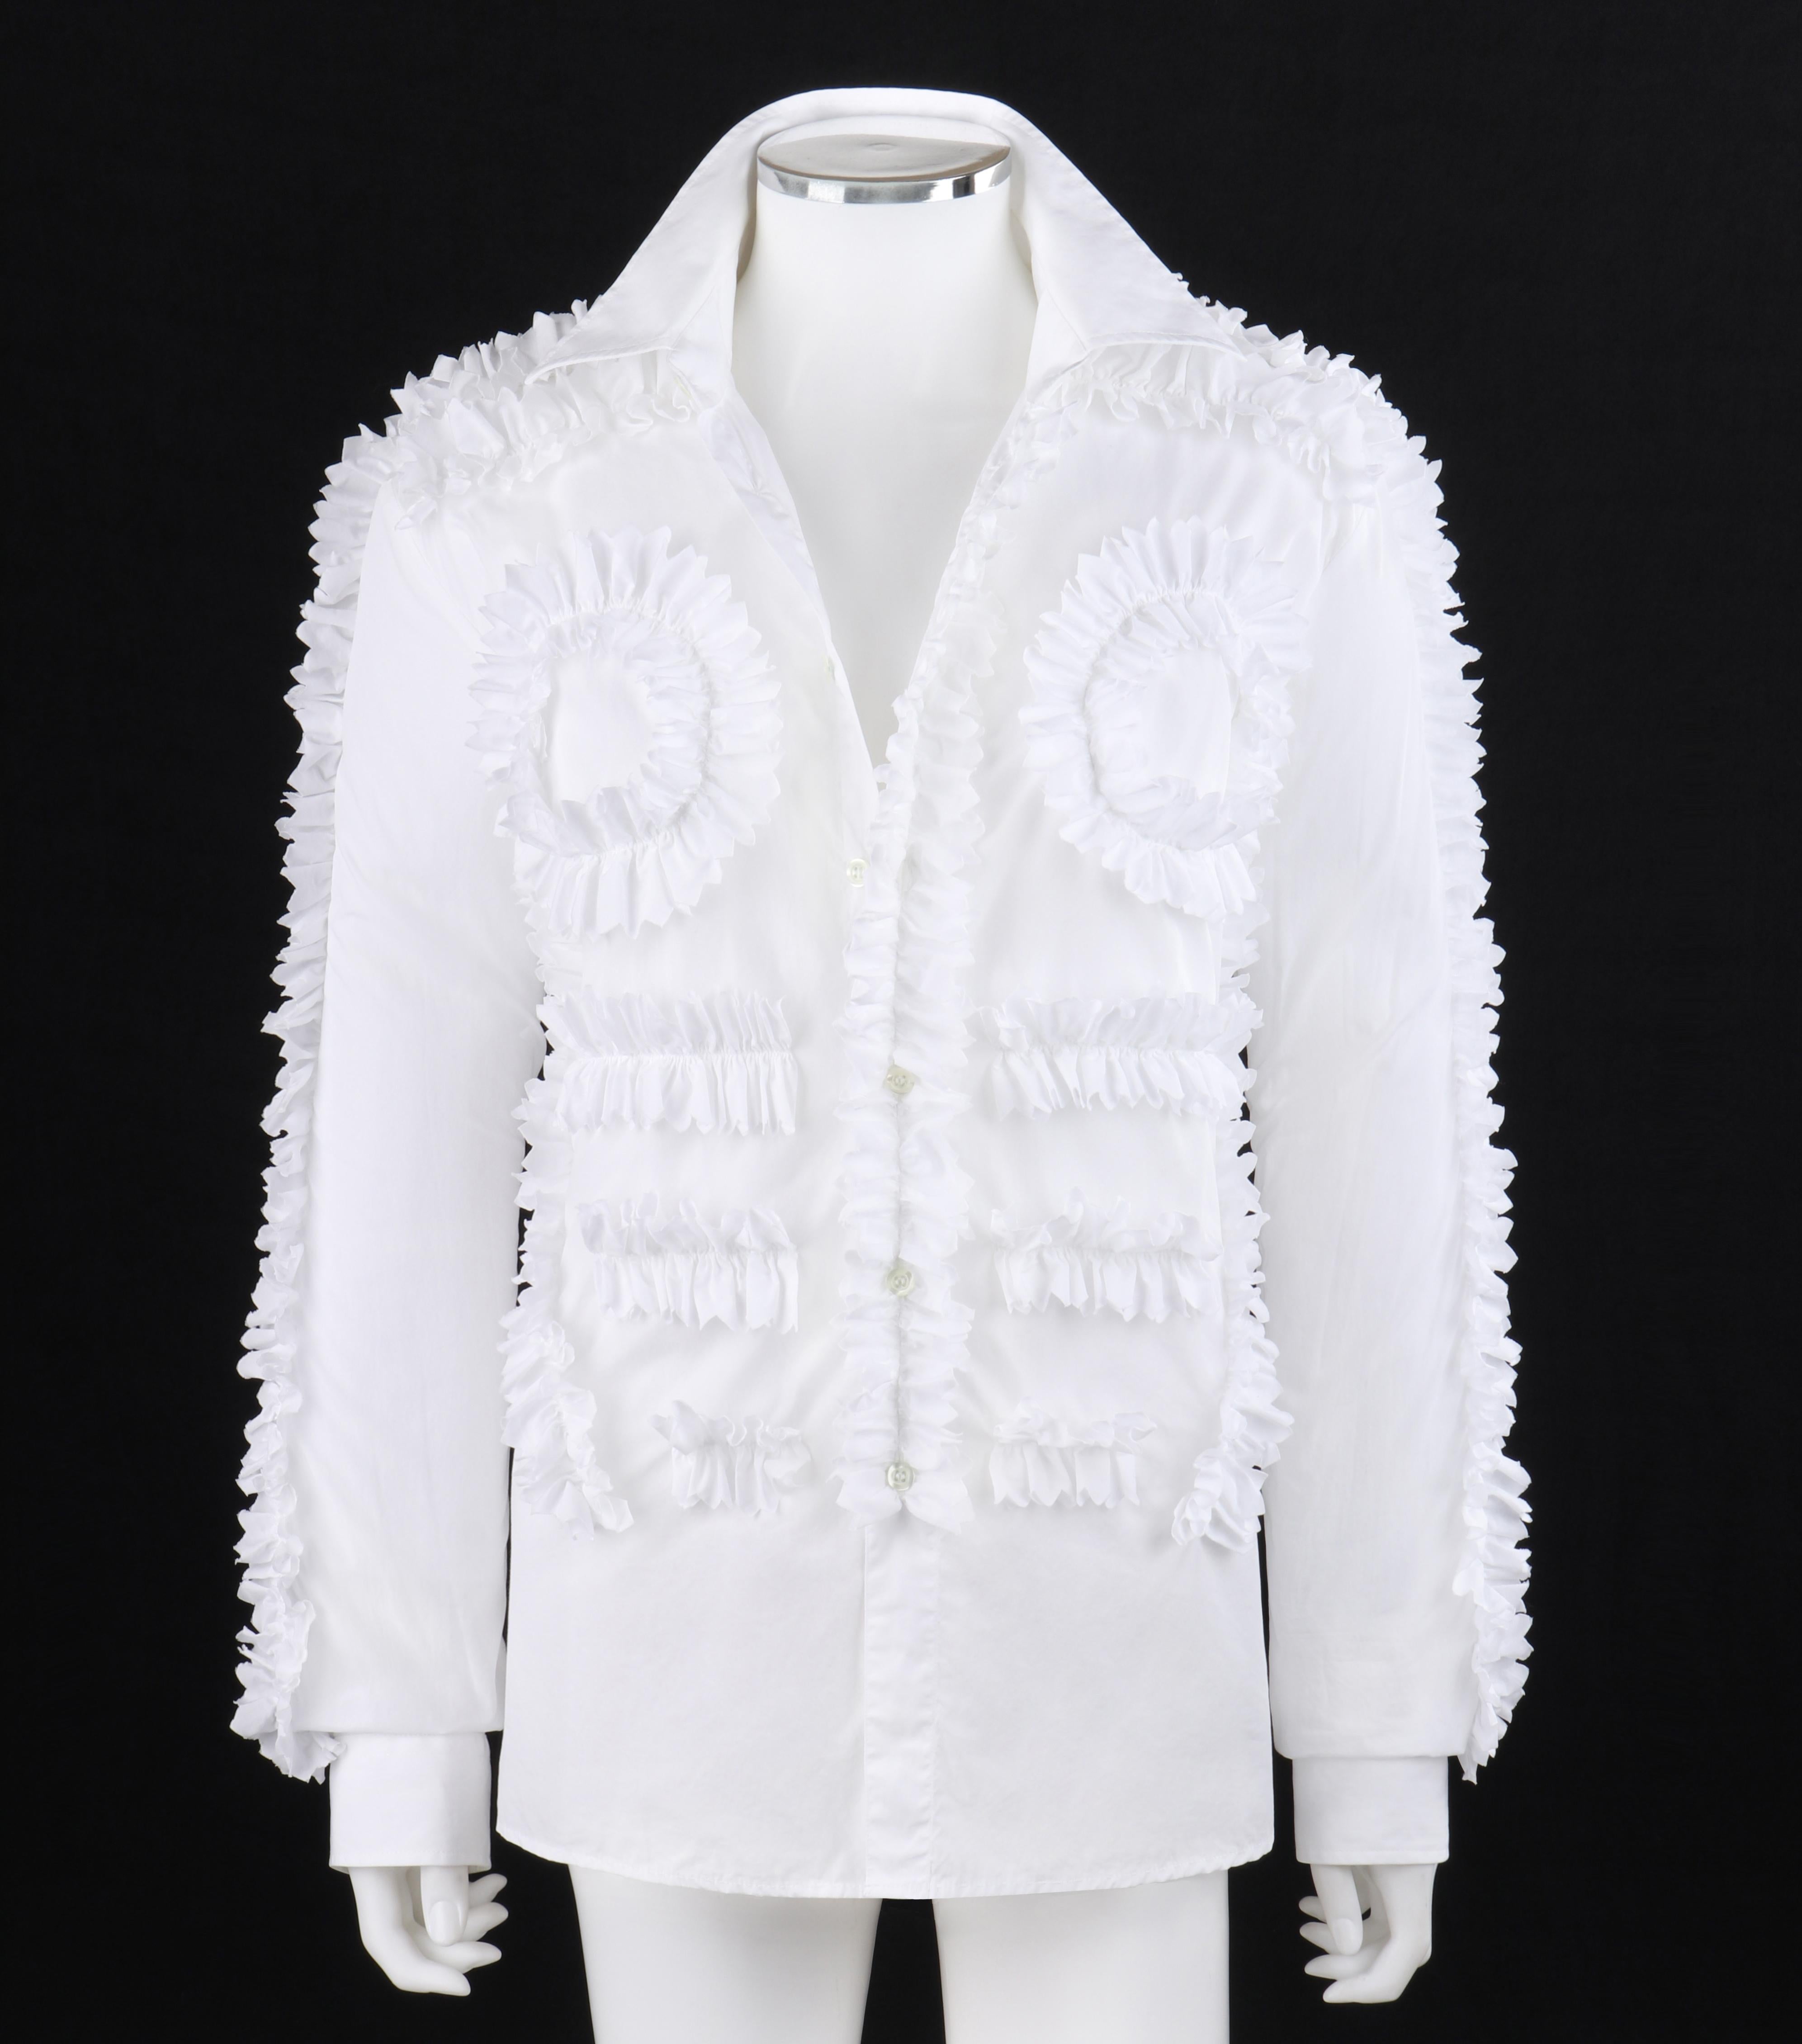 WALTER VAN BEIRENDONCK A/W 2014 Men's Symmetric White Ruffle Button Front Shirt 
 
Brand / Manufacturer: Walter Van Beirendonck
Collection: A/W 2014 Look #41
Style: Button front shirt
Color(s): Shades of white
Lined: No
Marked Fabric Content: 100%